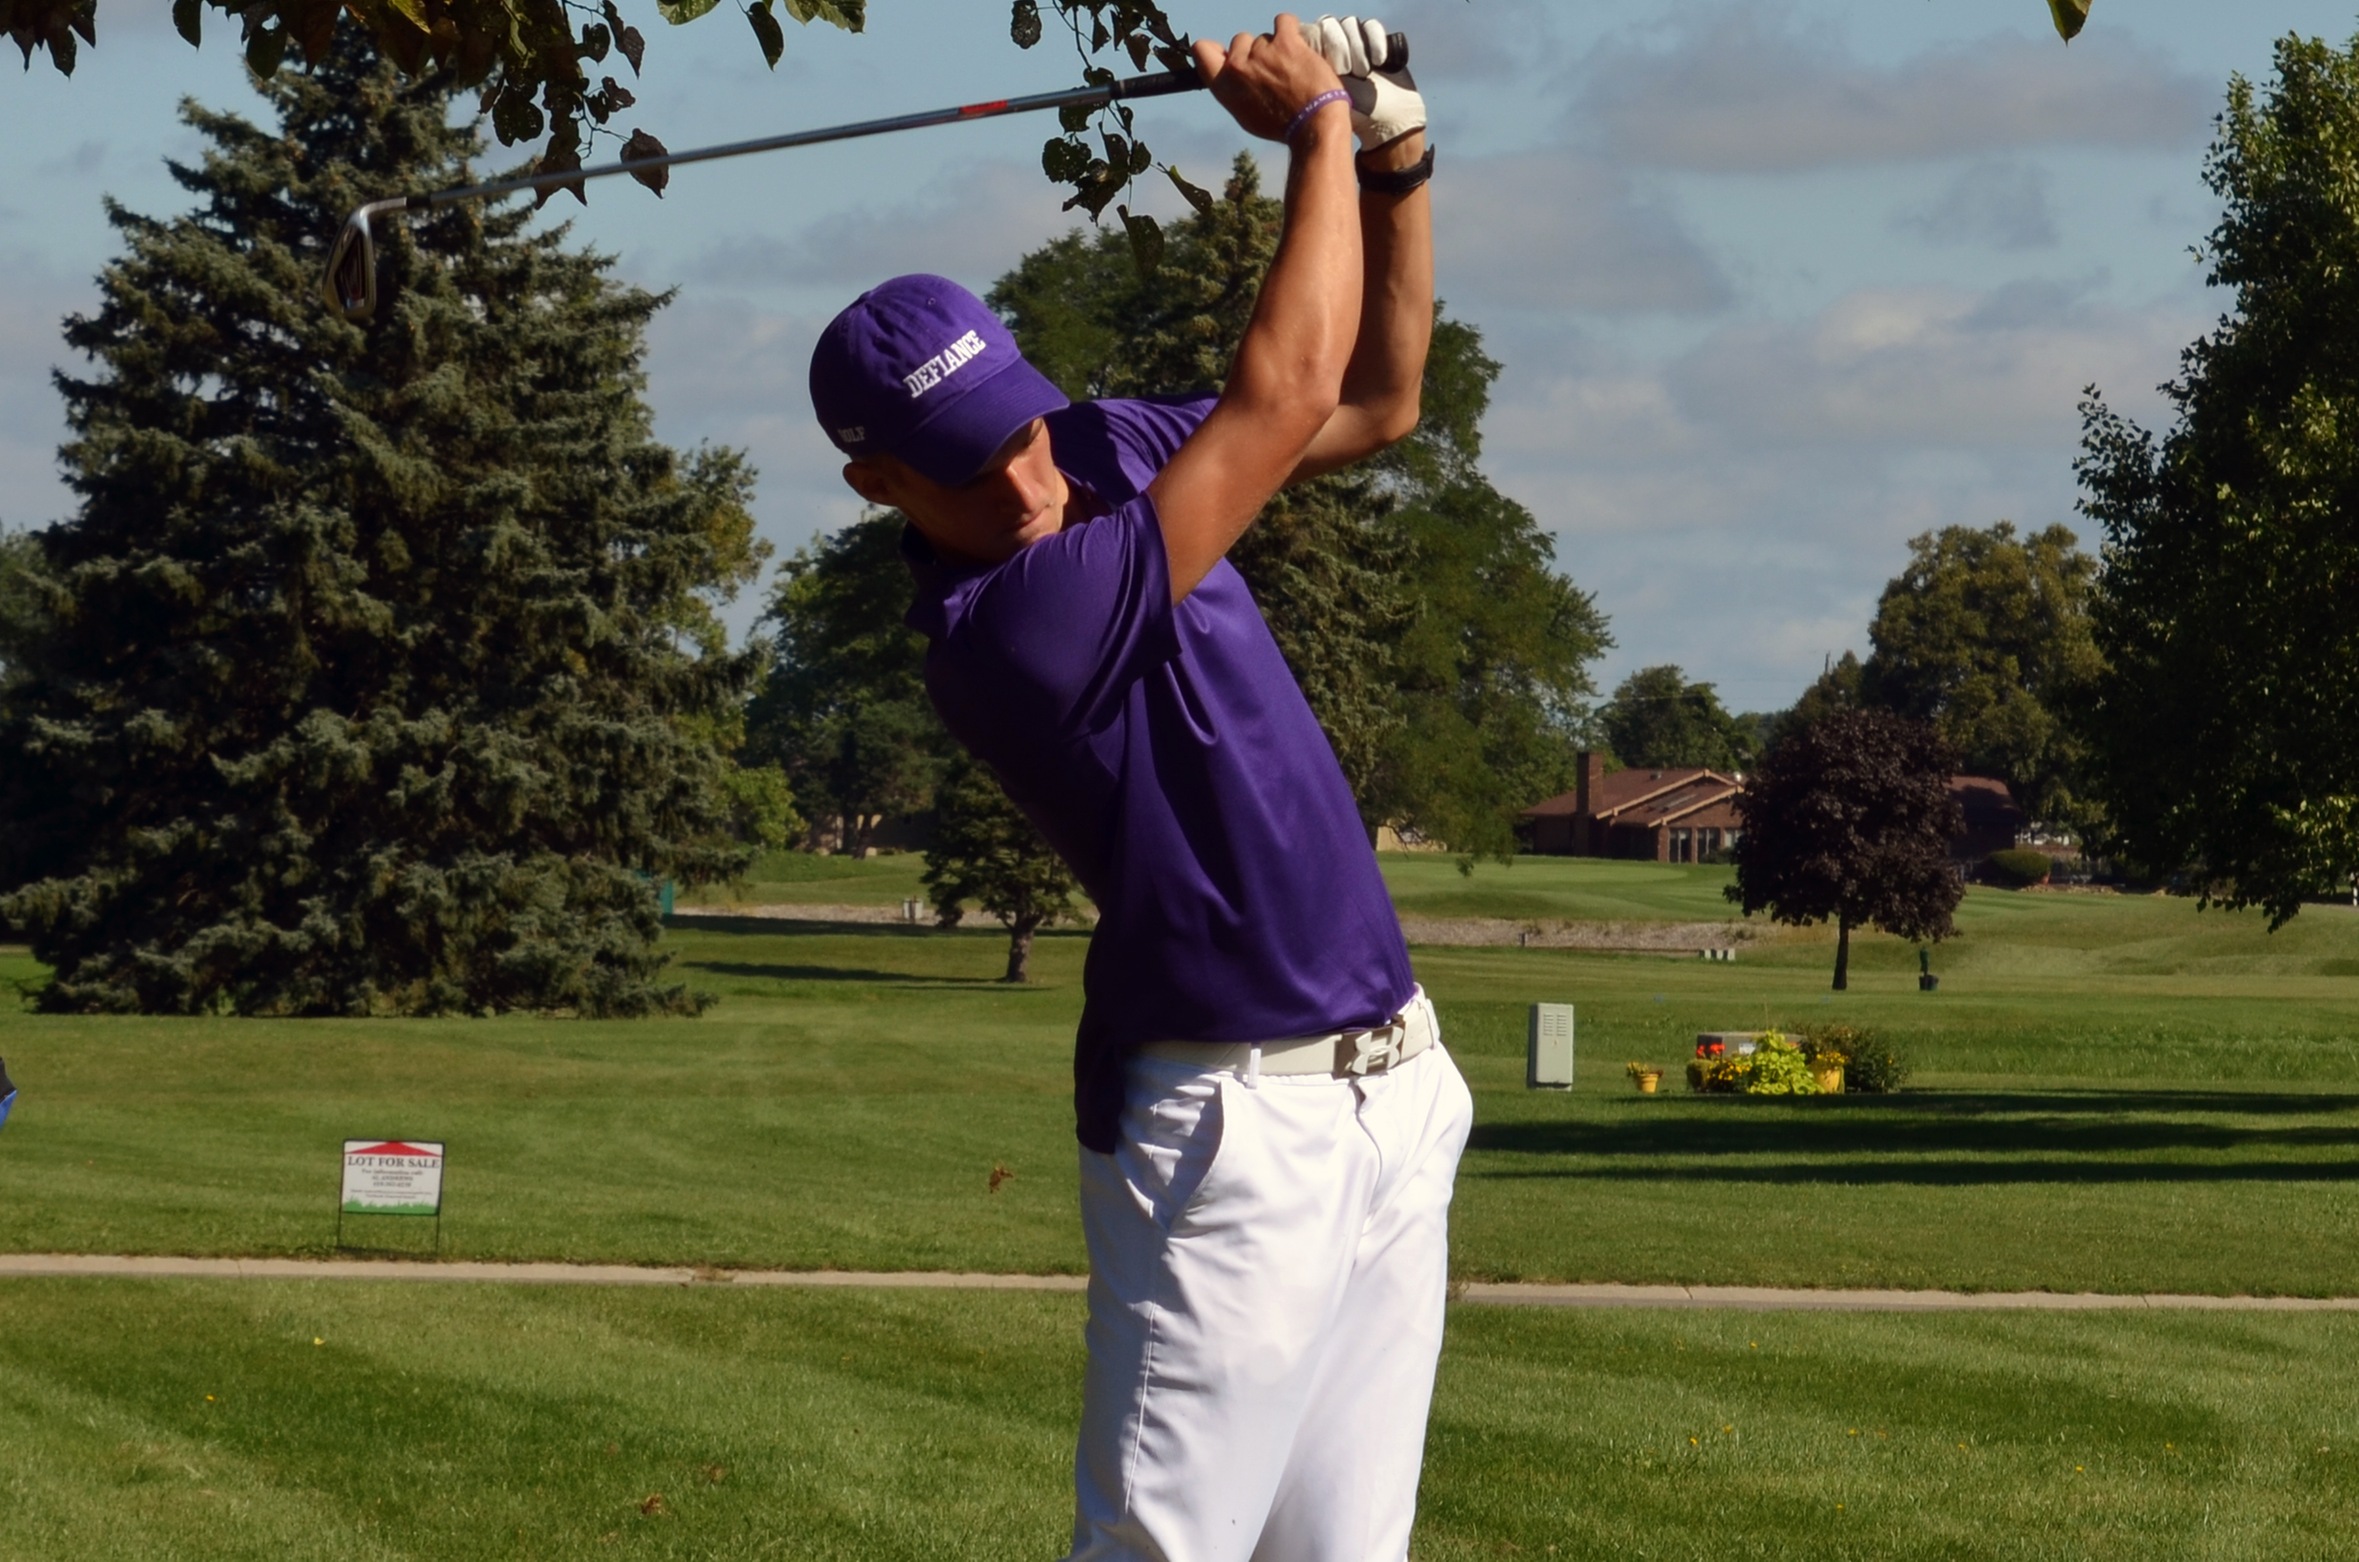 Men’s golf wraps up tournament play at Indian Ridge Golf Club on Sunday